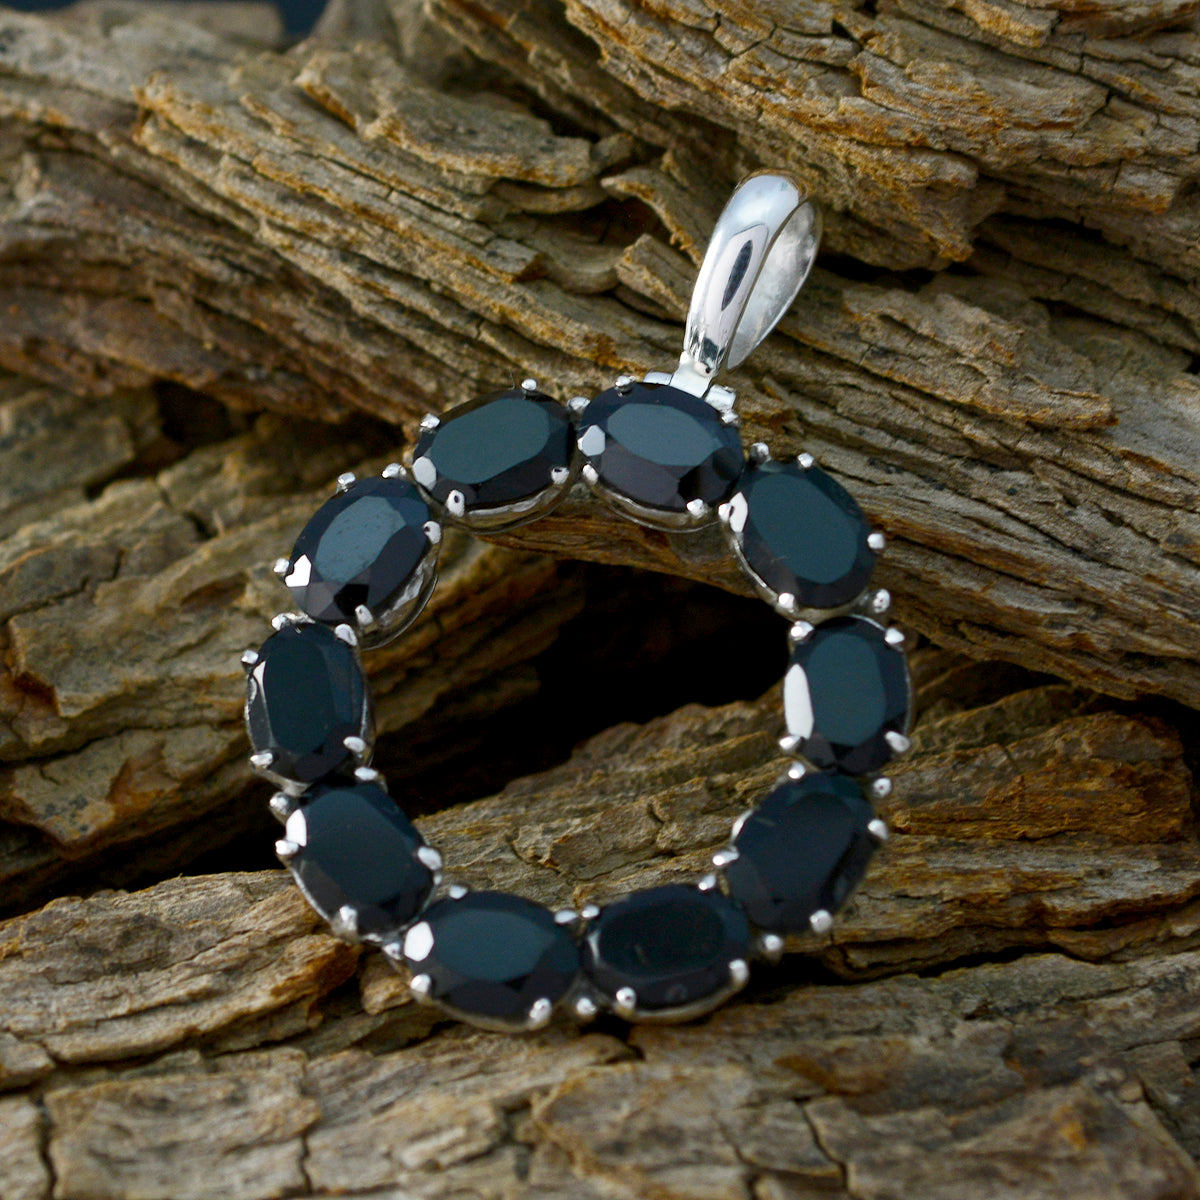 Riyo Good Gemstones Oval Faceted Black Black Onyx 925 Sterling Silver Pendant gift